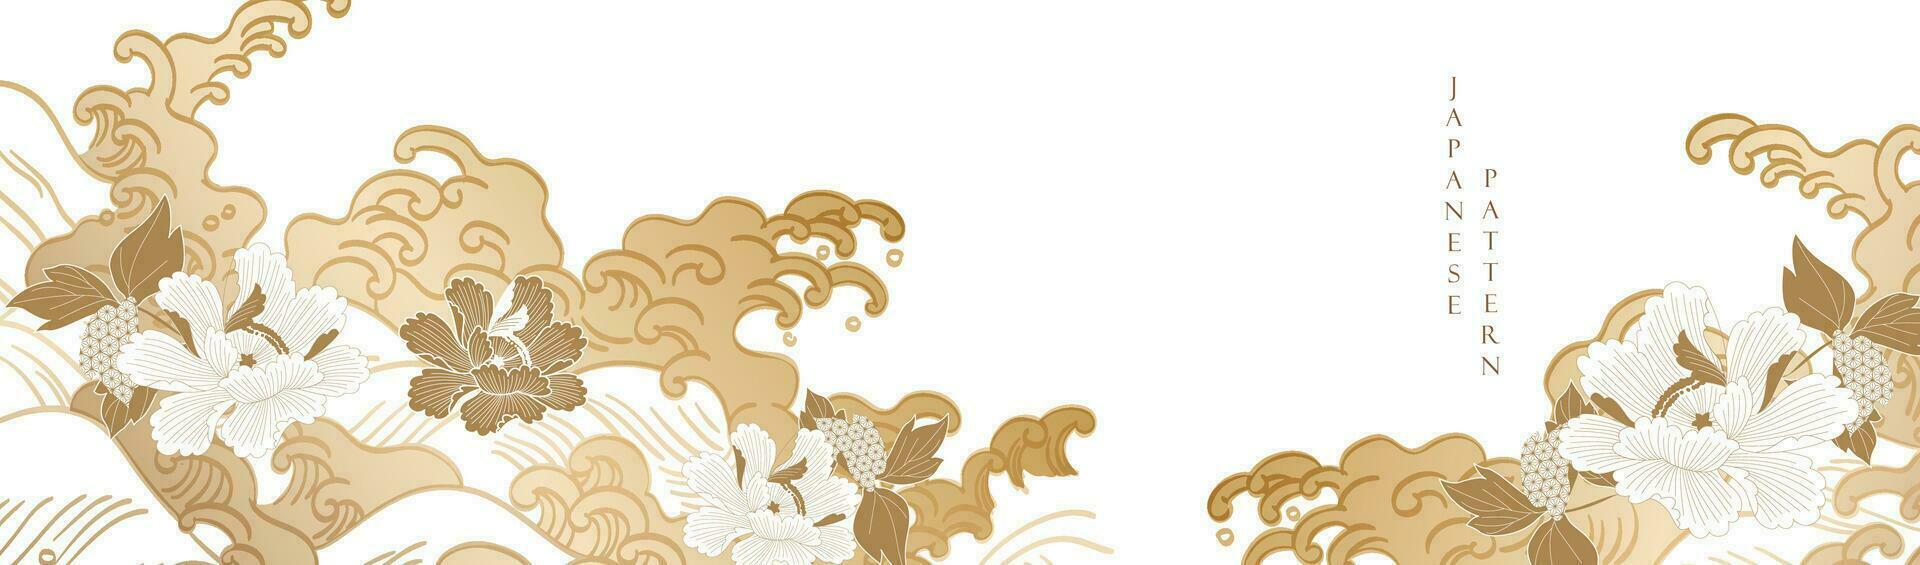 japansk bakgrund med guld textur vektor. pion blomma, hand dragen Vinka kinesisk hav Vinka dekorationer baner i årgång stil. konst abstrakt blommig mönster design. vektor